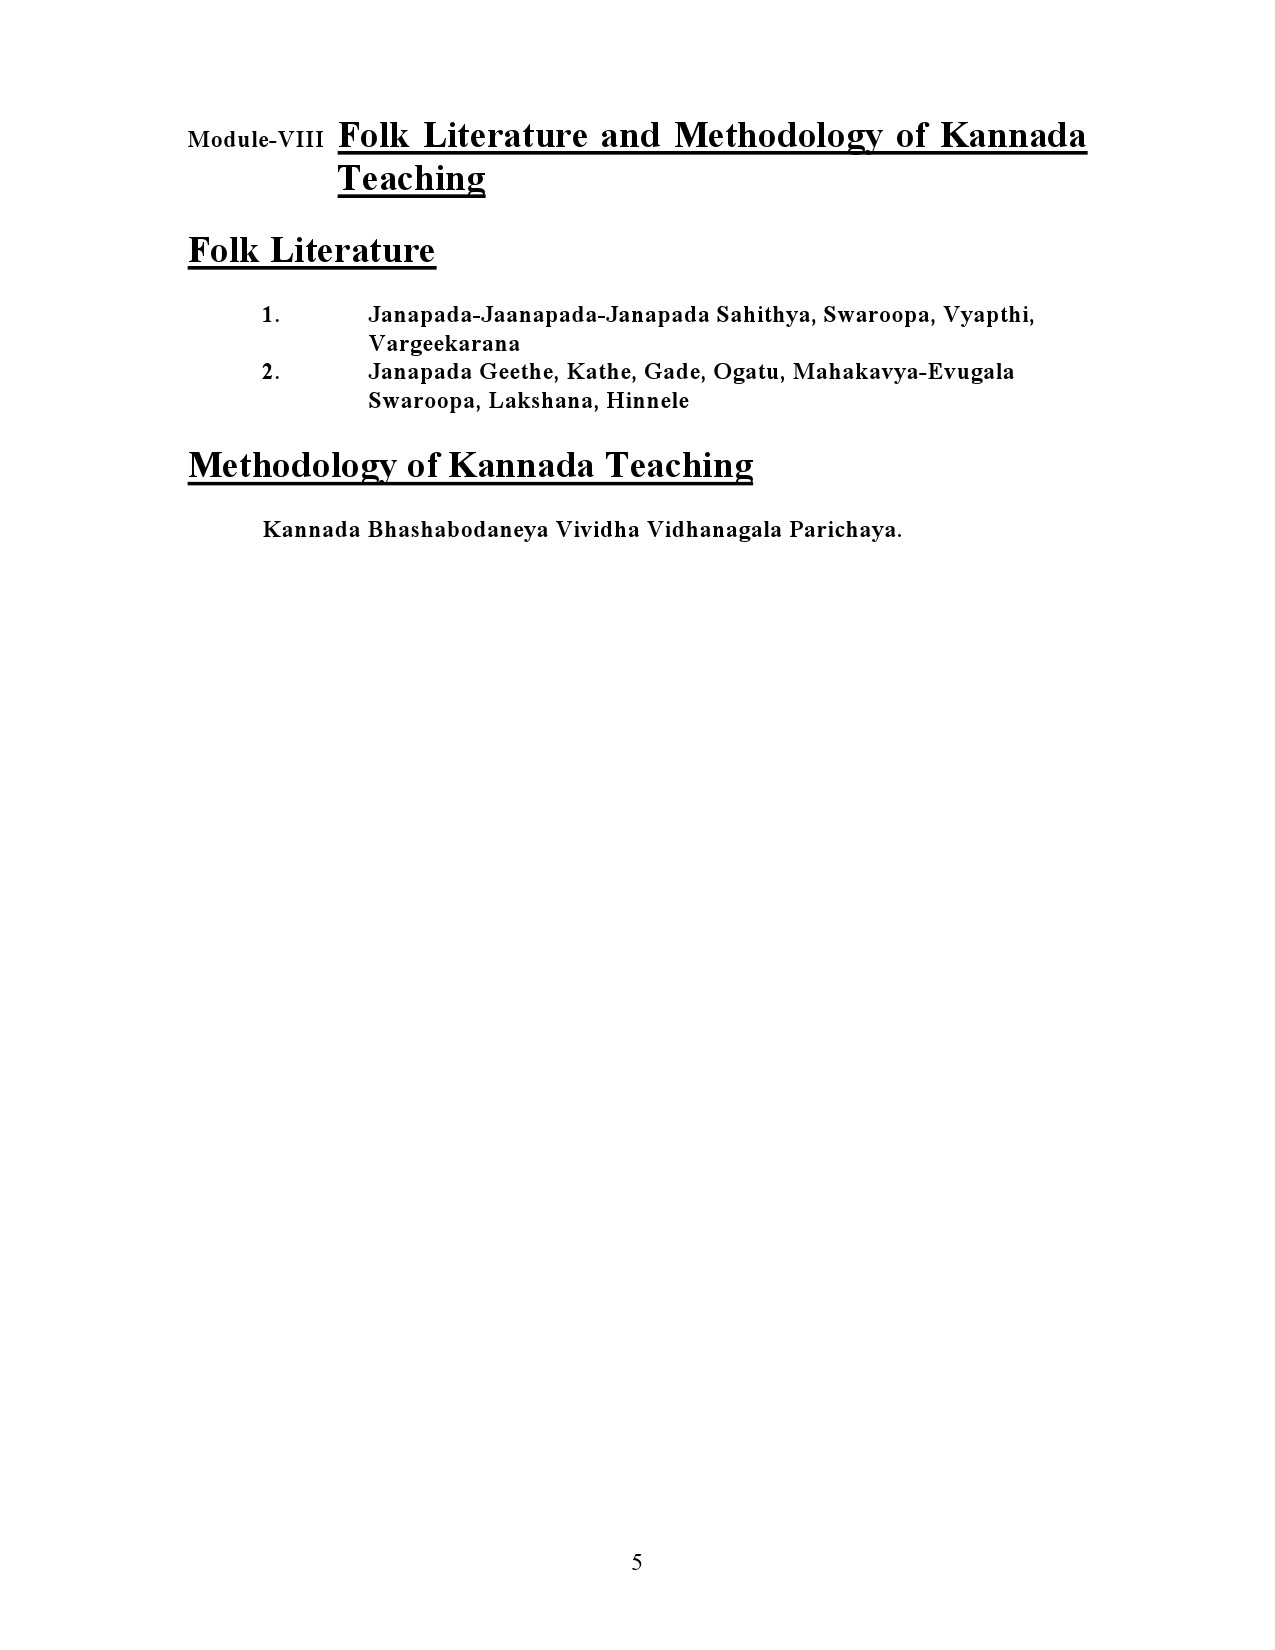 High School Assistant Kannada Part A Kerala Examination Syllabus 2021 - Notification Image 5